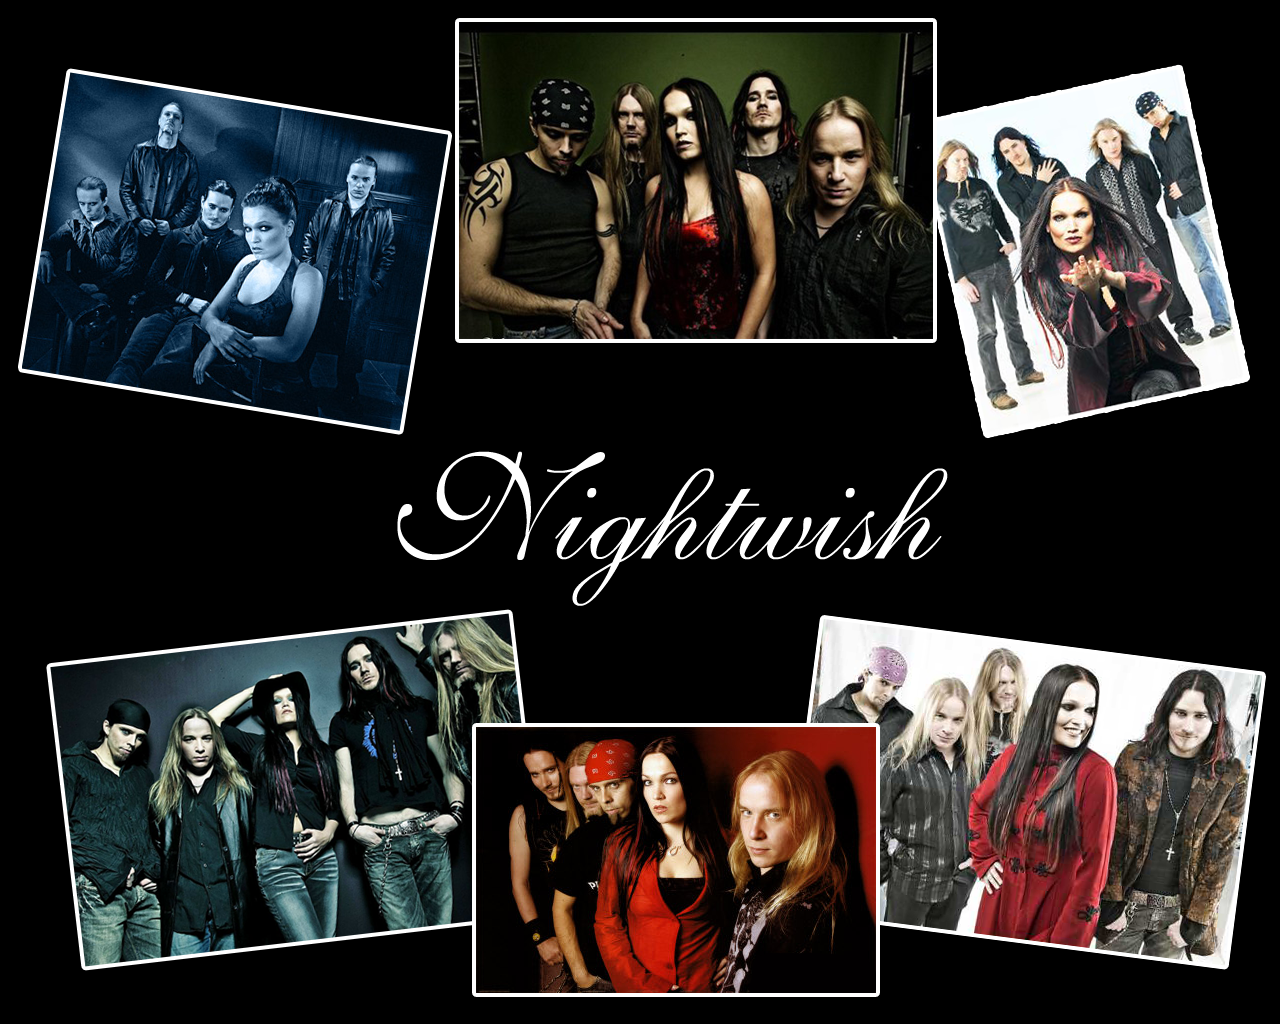 nightwish complete discography torrent download